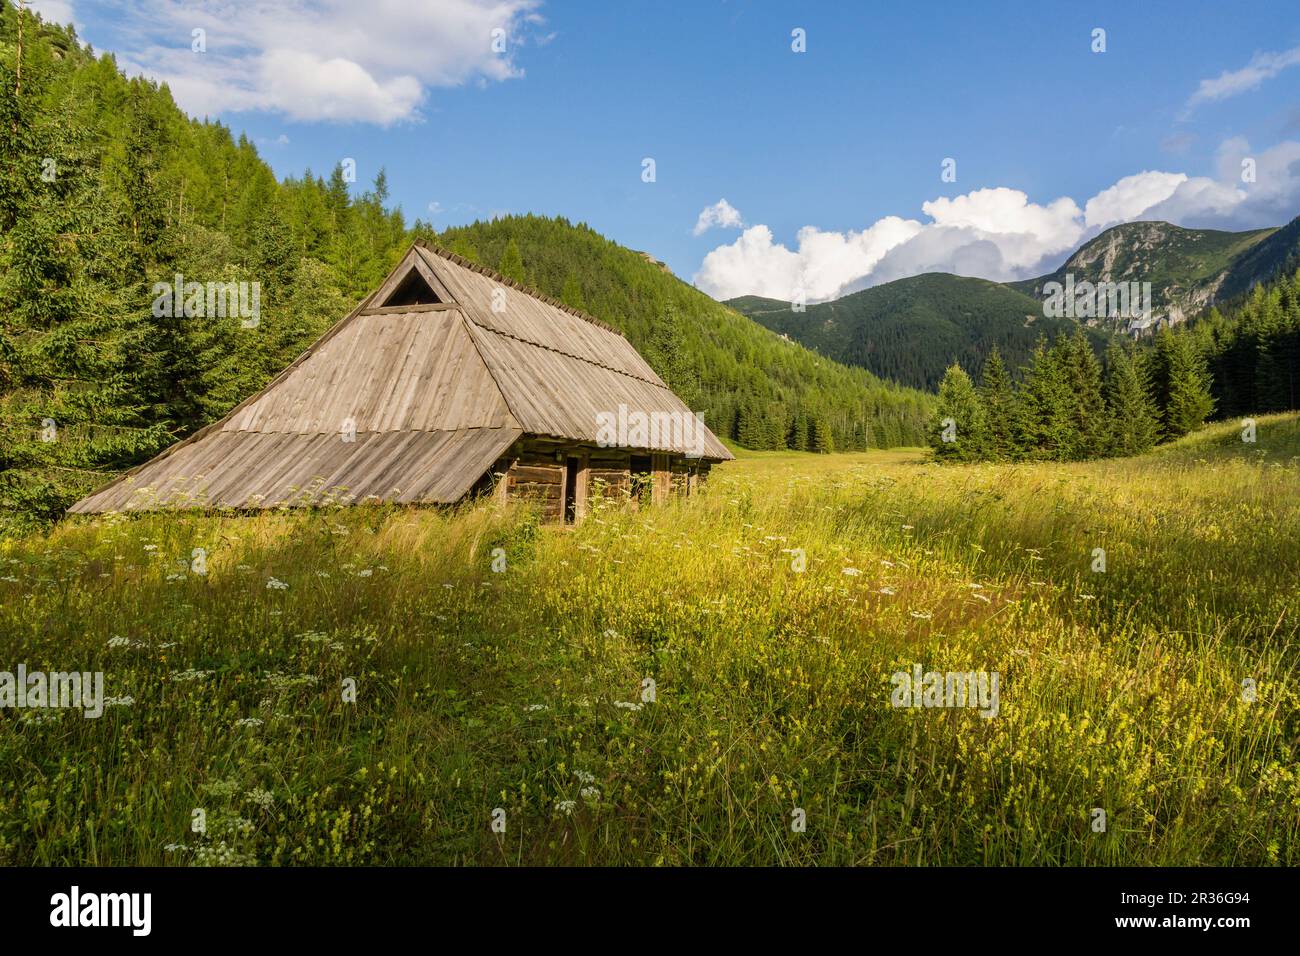 valle Jaworzynka, parque nacional Tatras, Zakopane, voivodato de la Pequeña Polonia, Cárpatos, Polonia, europe. Stock Photo